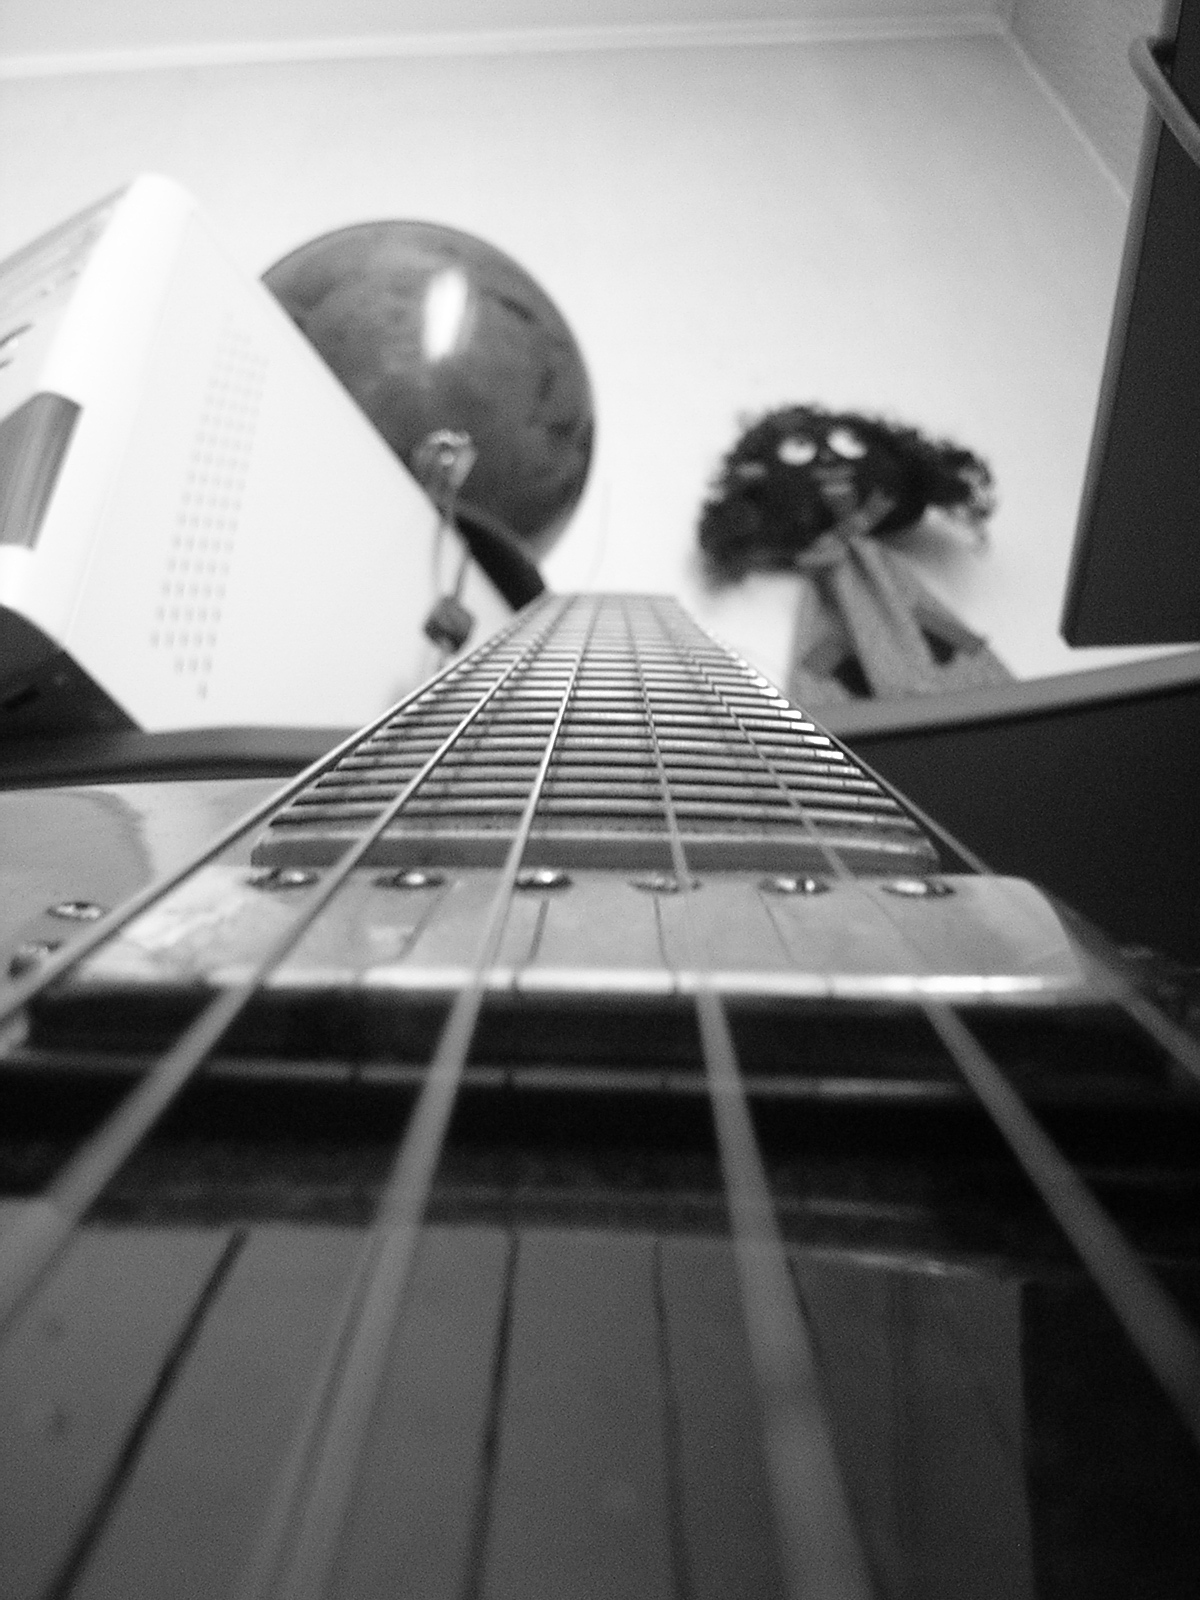 Strings of a guitar